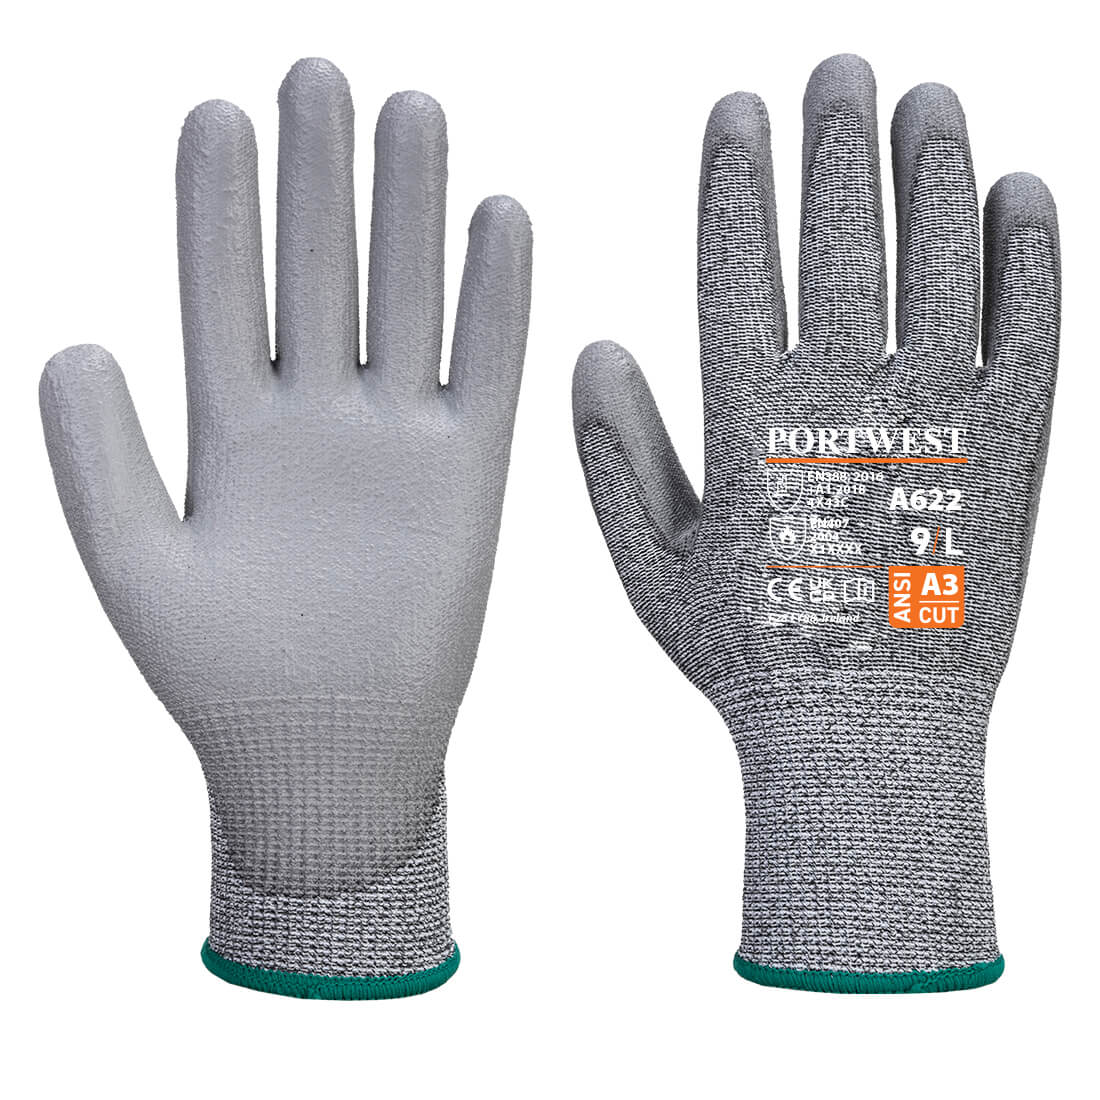 A622 - MR Cut PU Palm Glove - Grey - XLarge (Size 10)